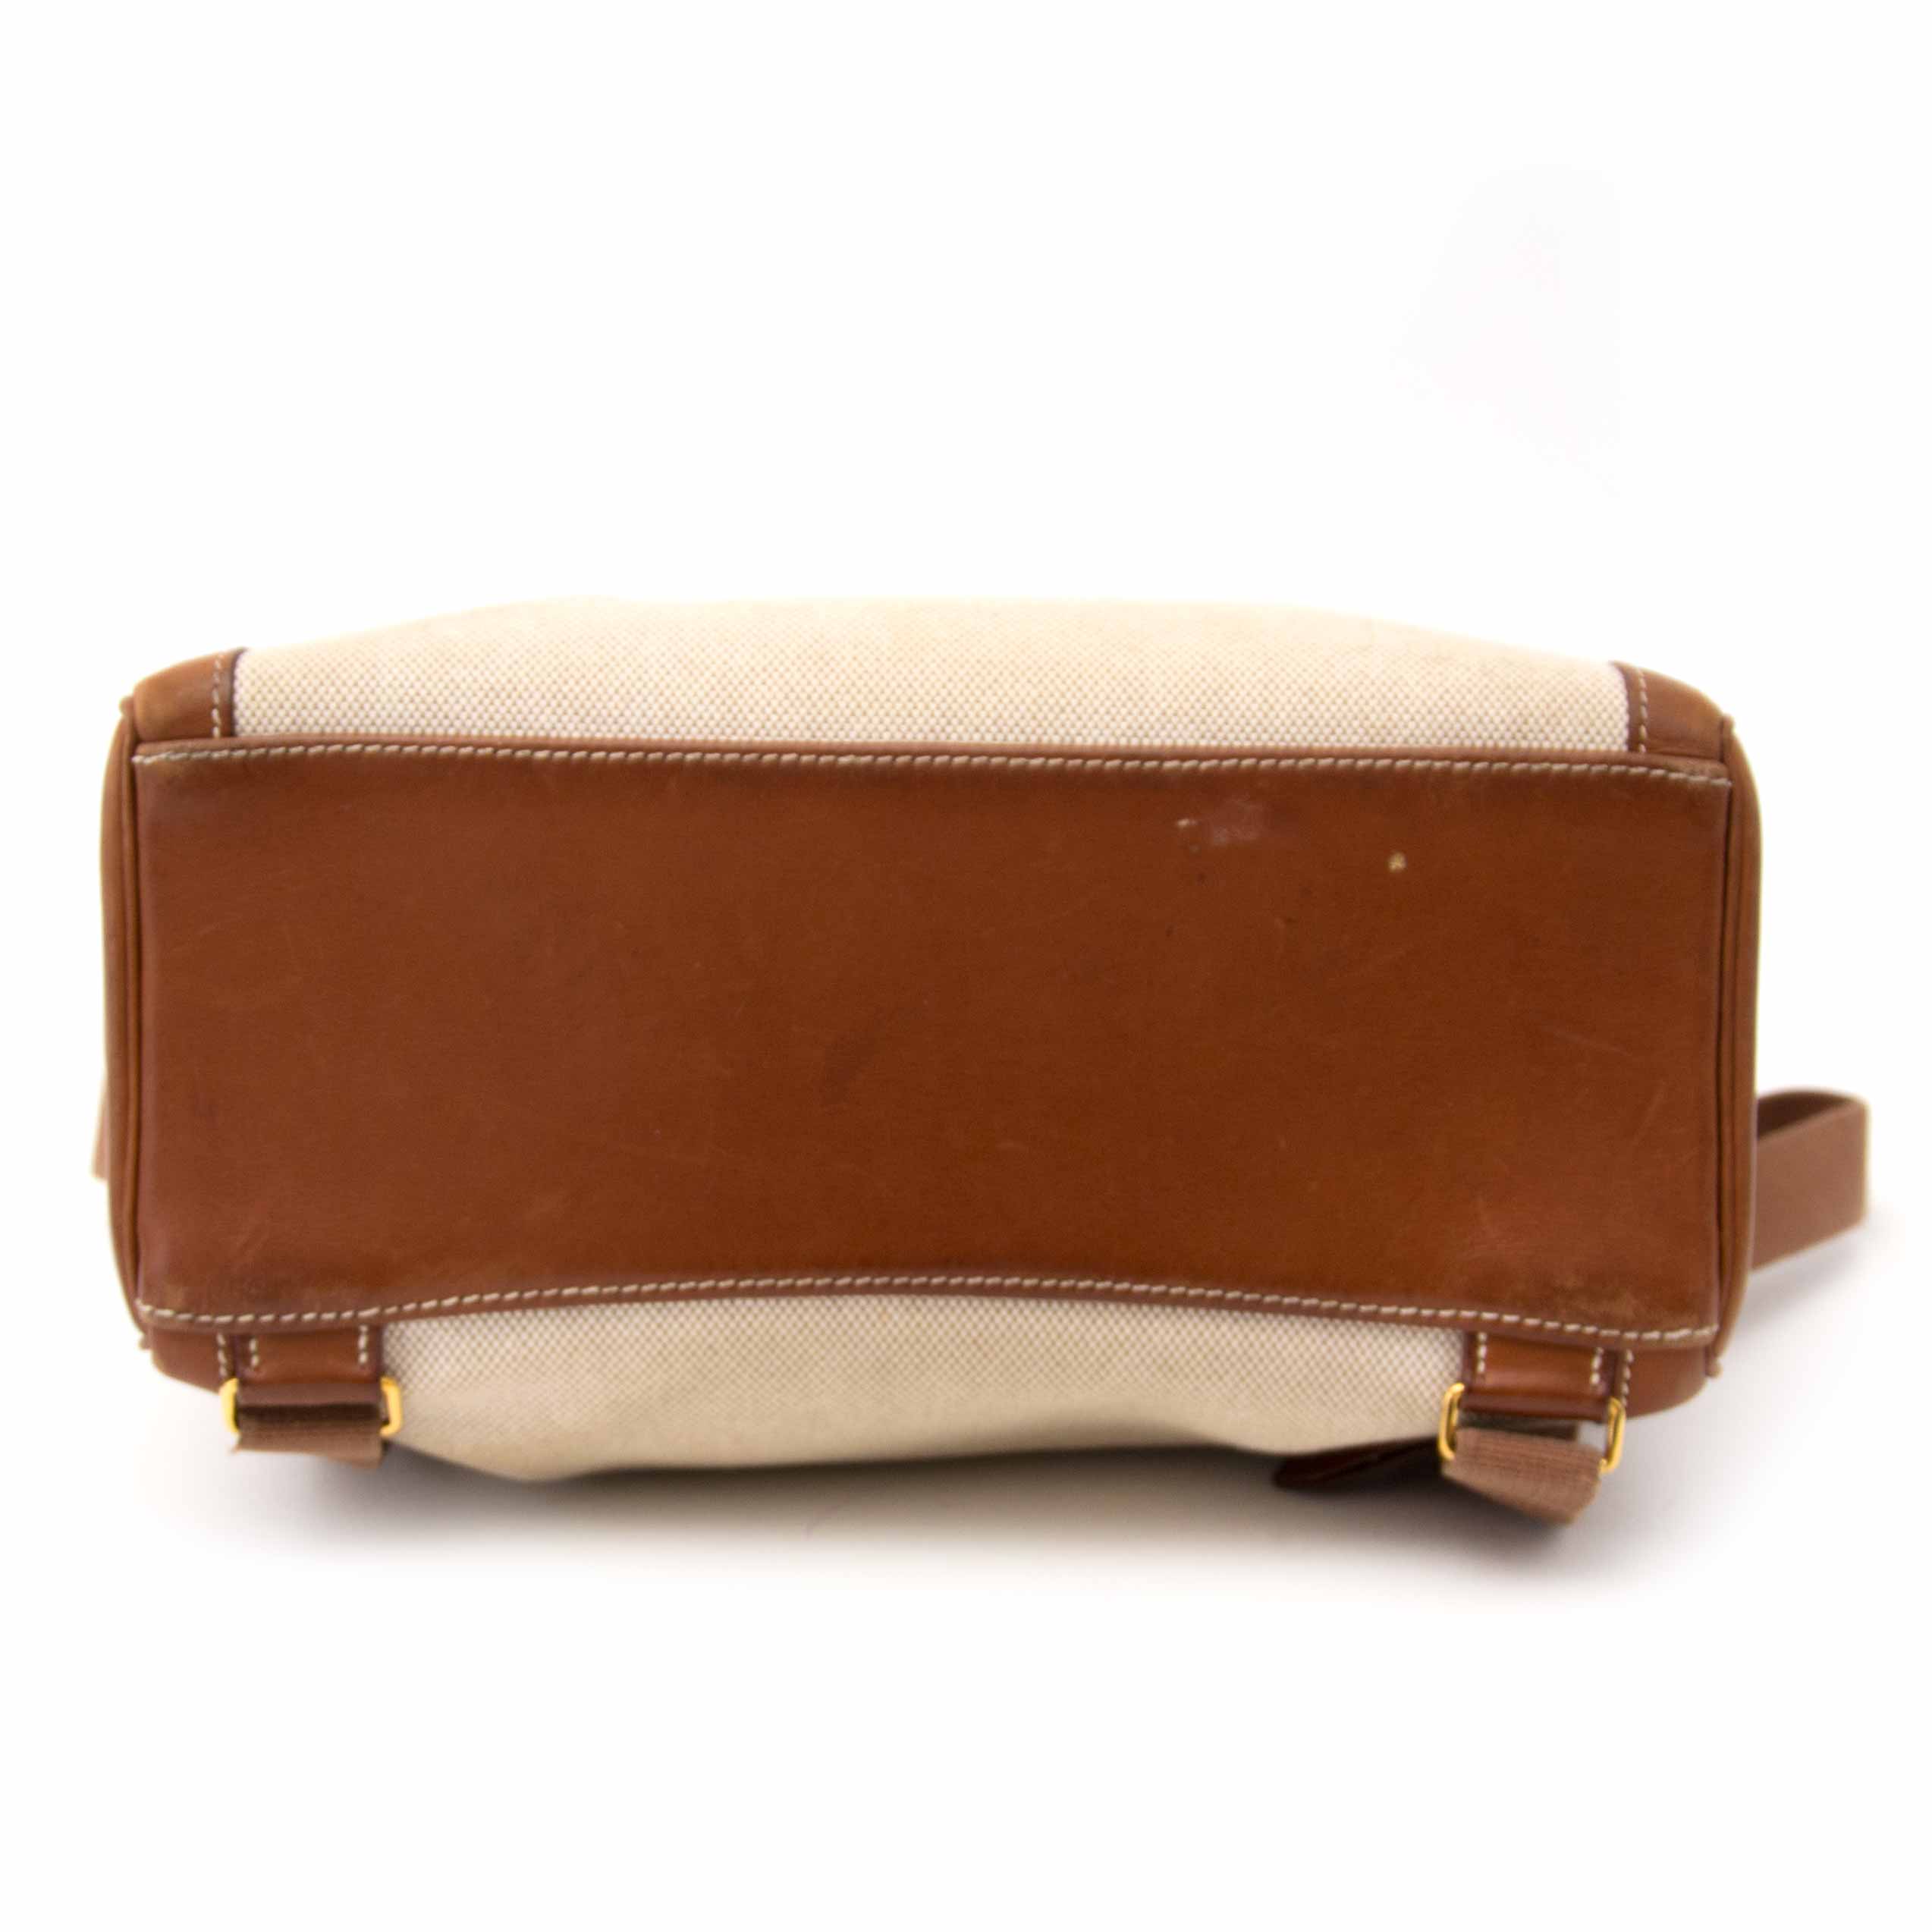 VINTAGE HERMÈS KELLY ADO BACKPACK in saddle brown leather – THE MODAOLOGY